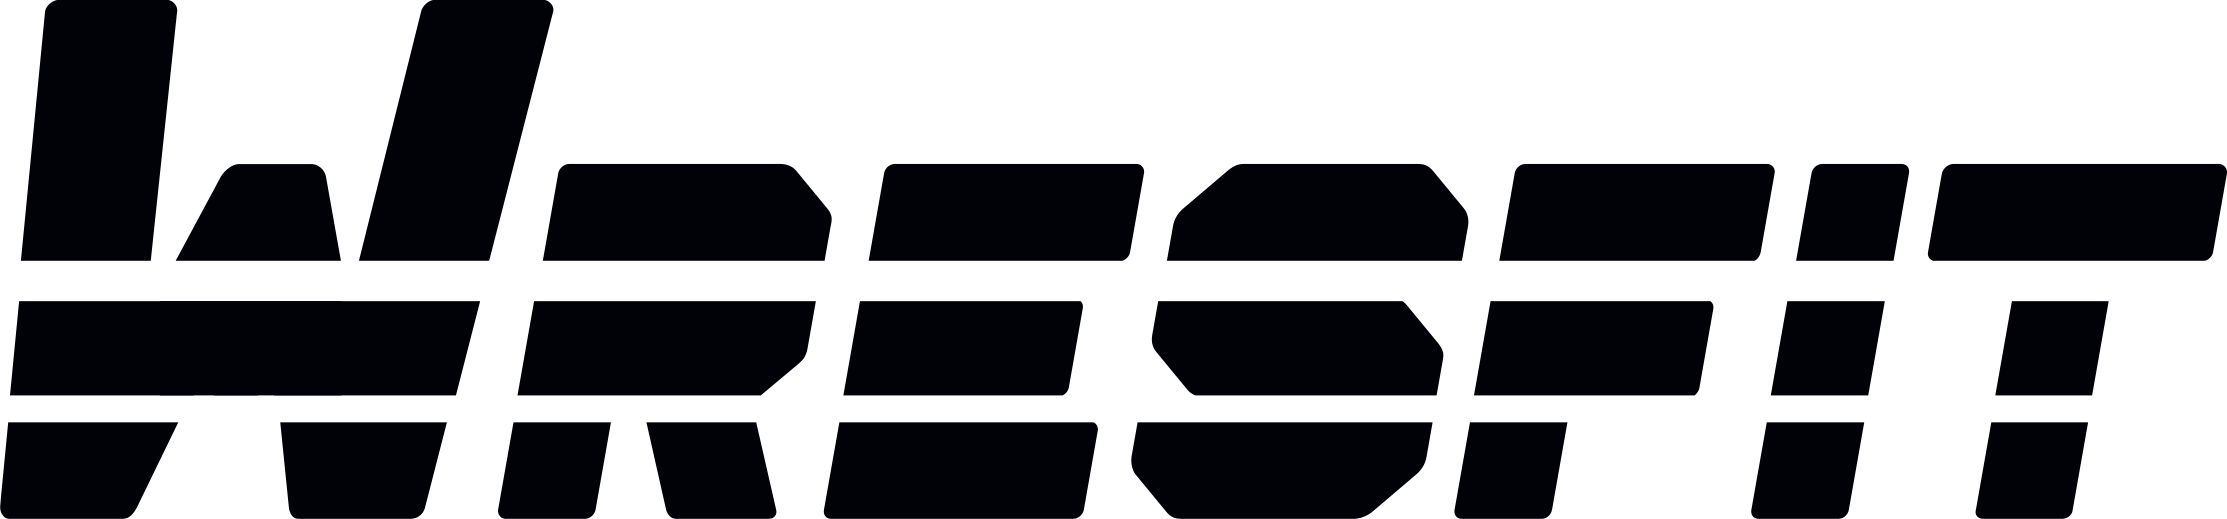 Wresfit logo